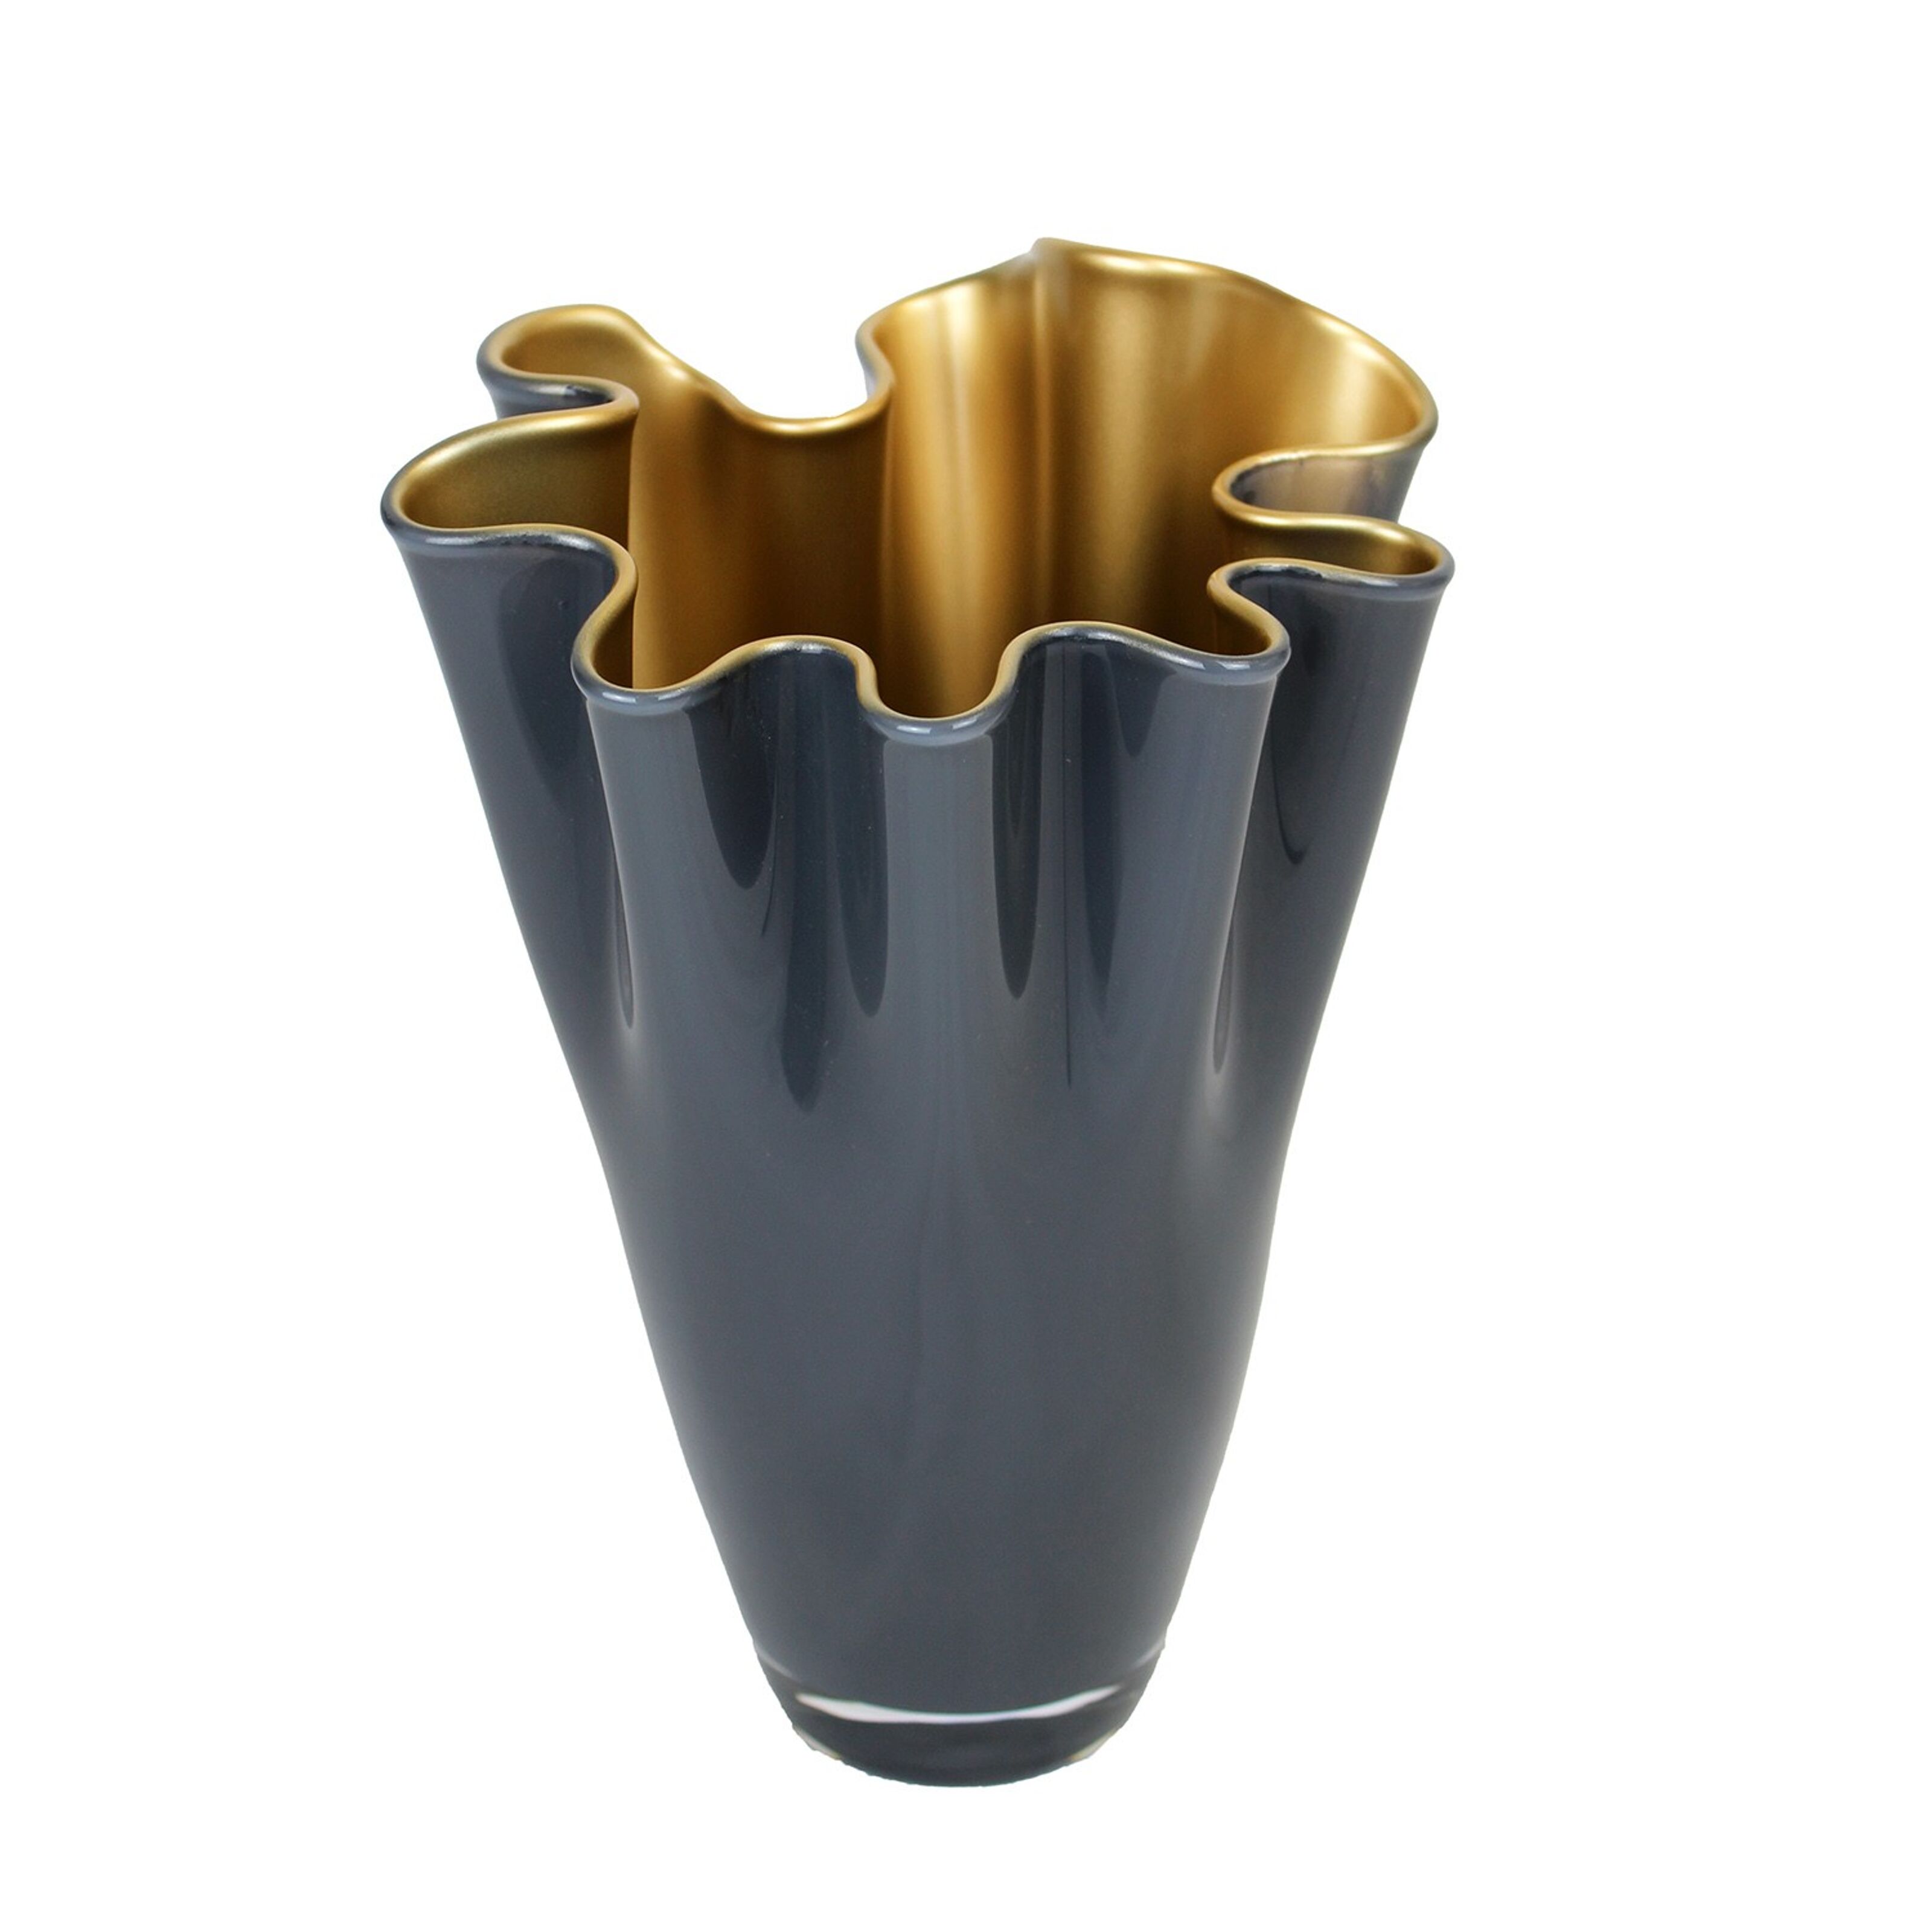 Achat Vase verre ondulé bicolore or gris en gros